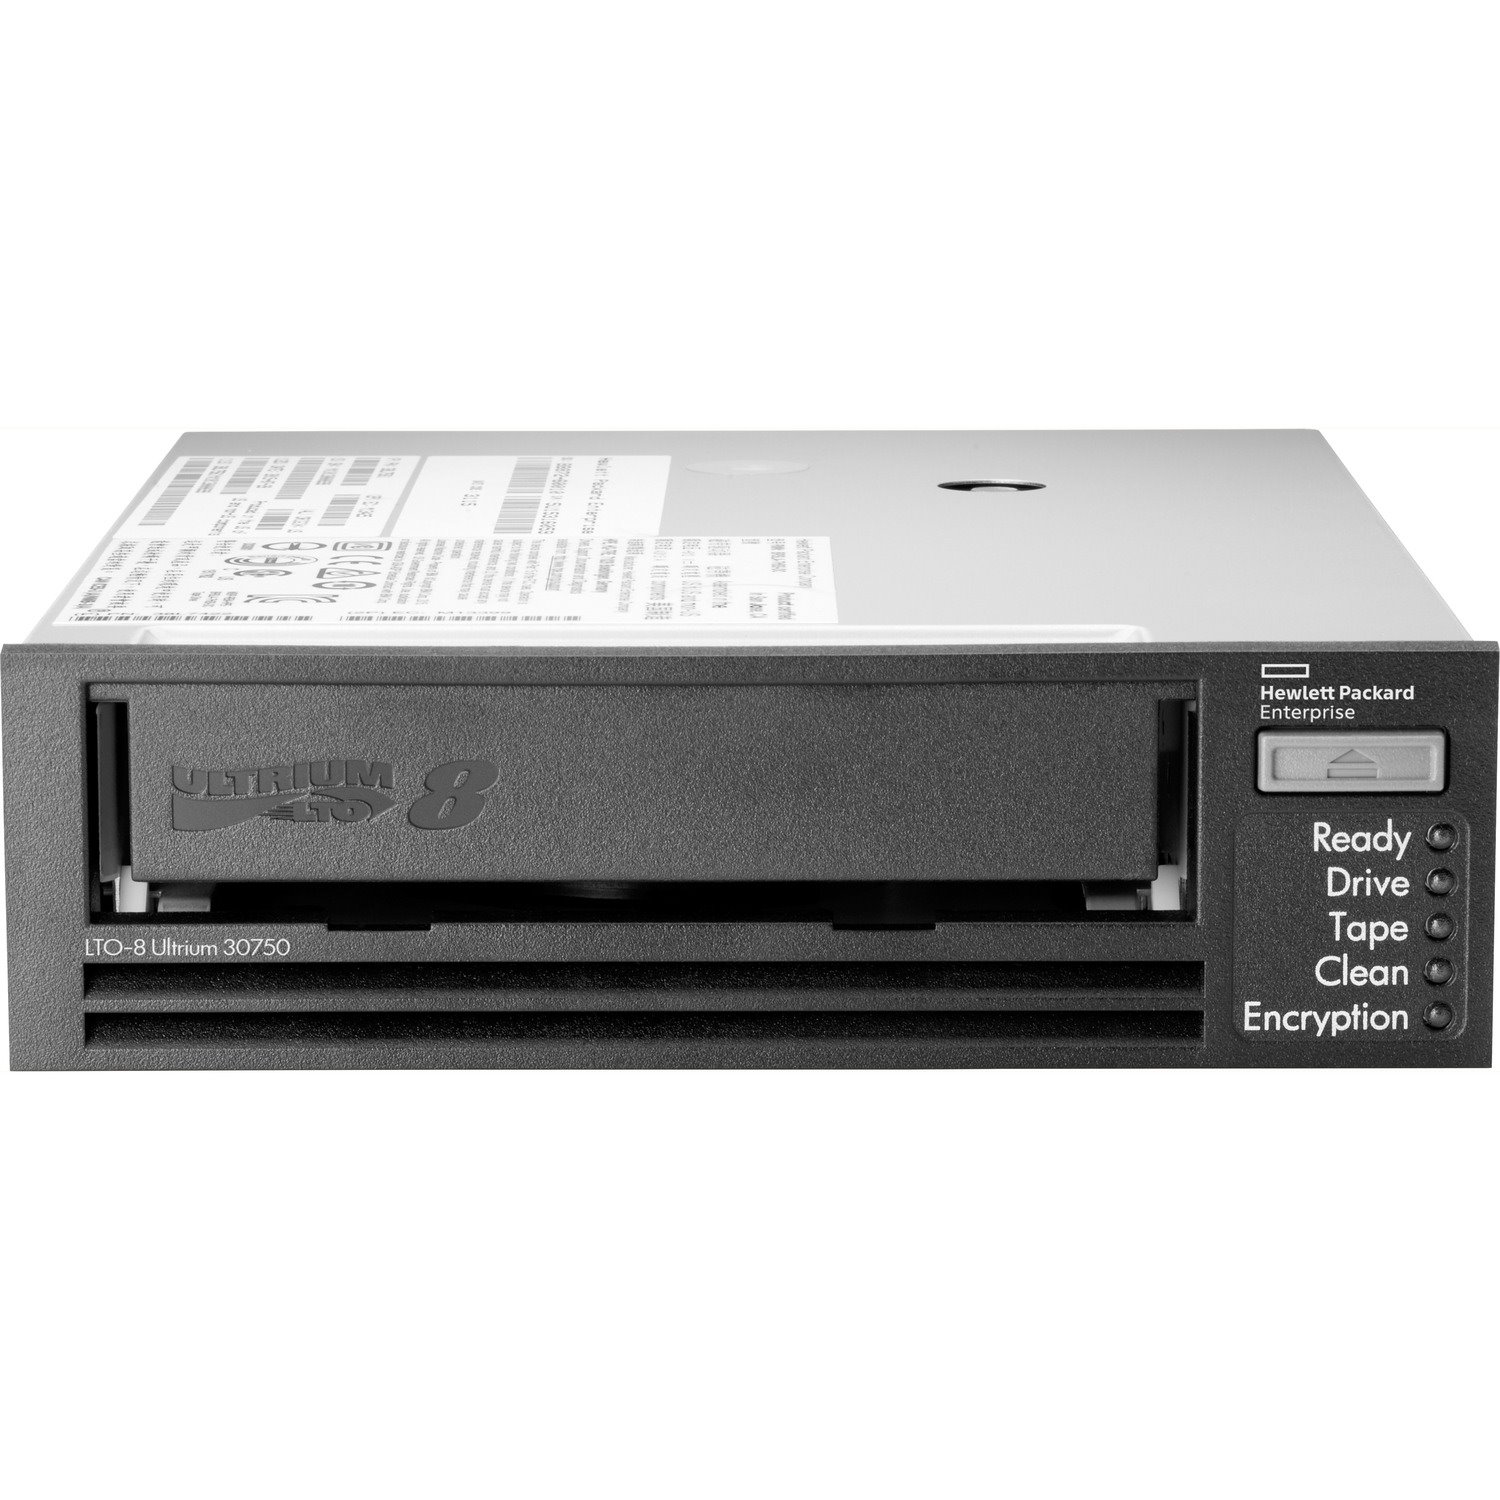 HPE StorageWorks LTO Ultrium 5 Tape Drive